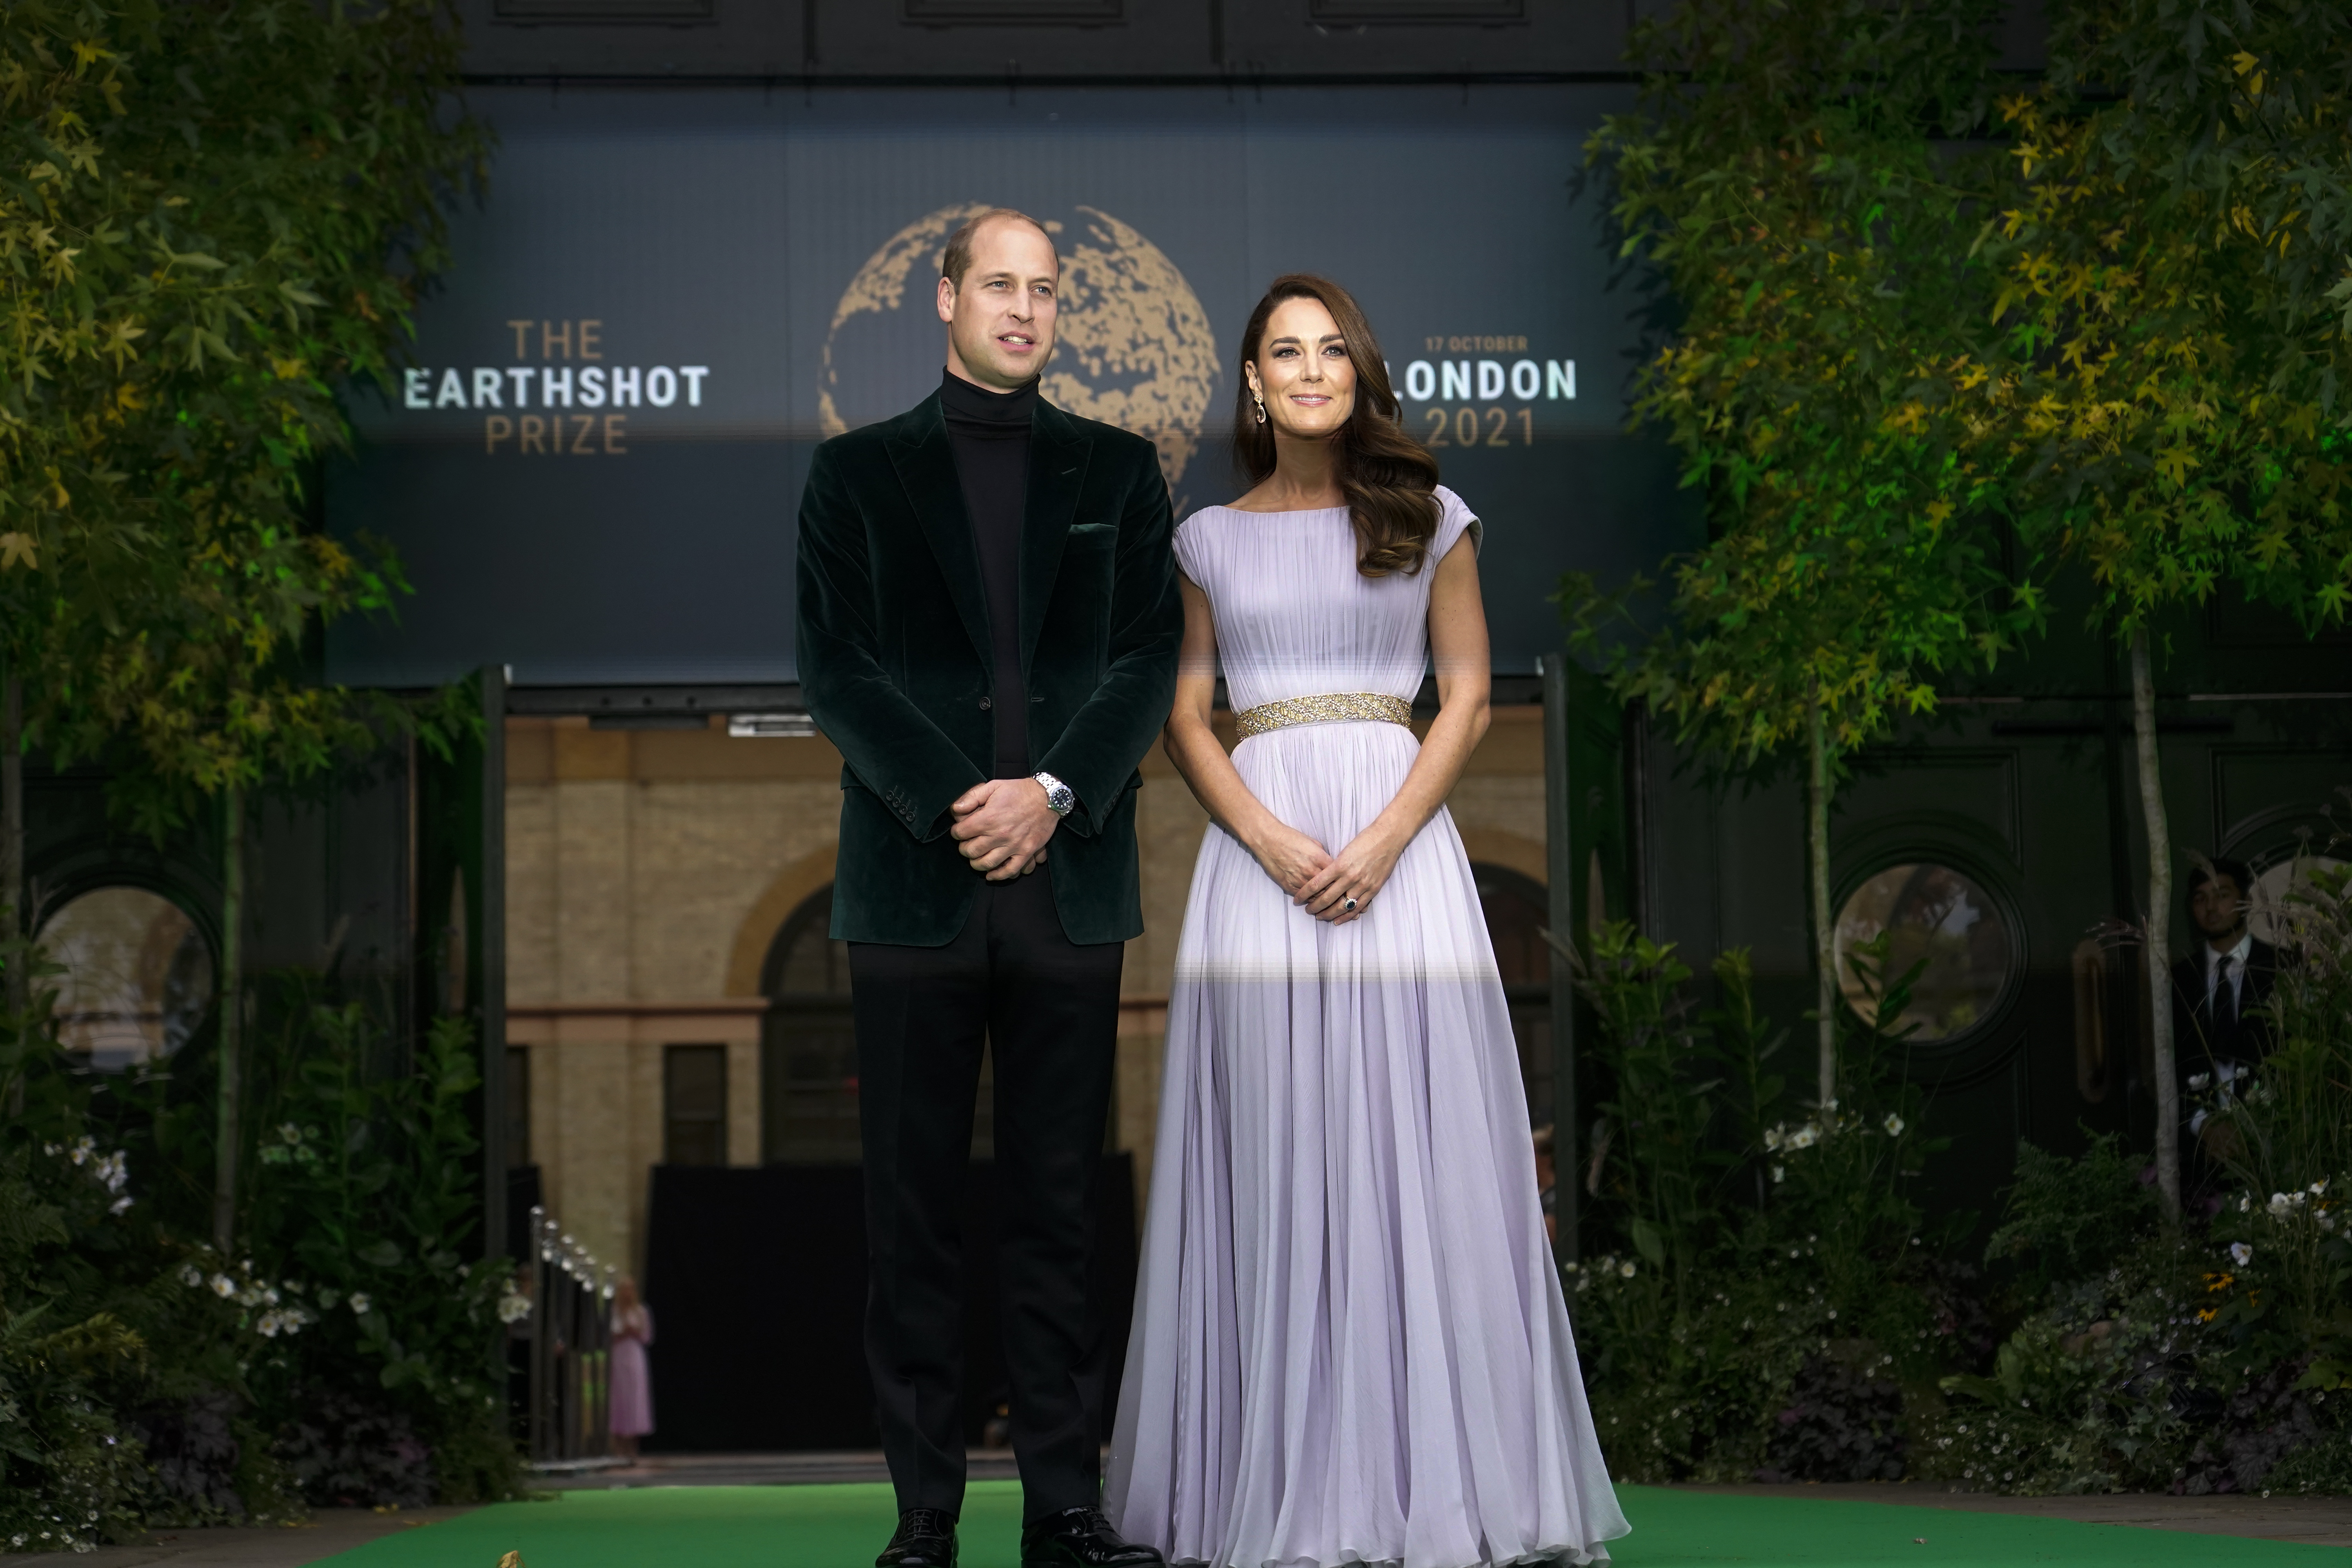 William e Kate - Prêmio Earthshot